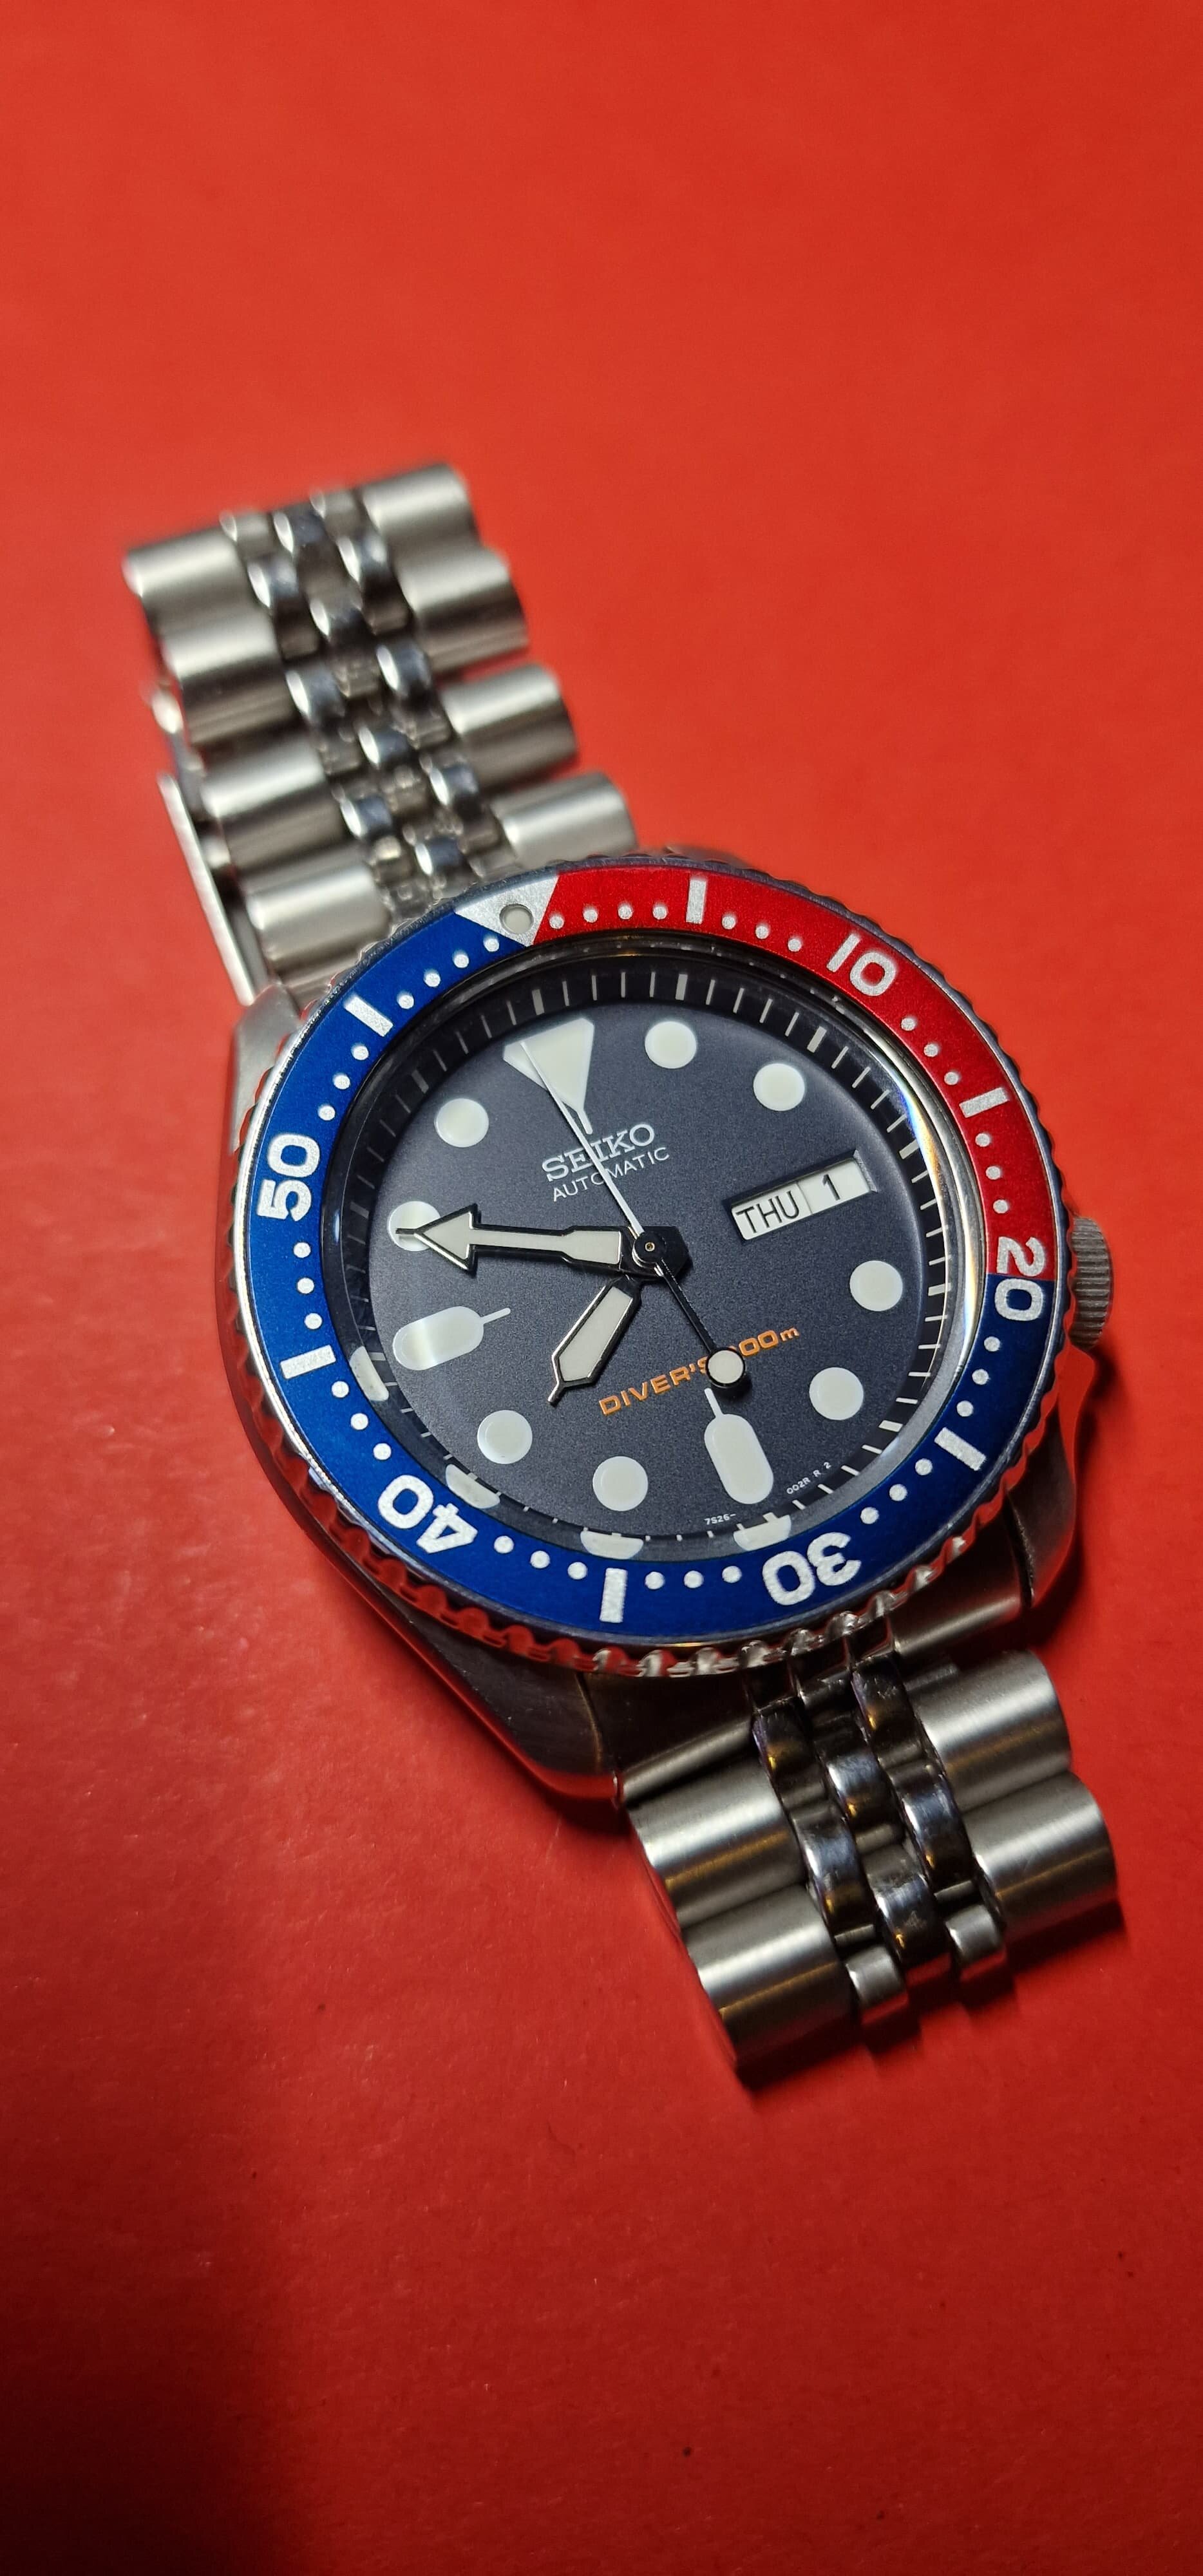 Seiko SKX 009 k2 - Mercado de relojes - HdR